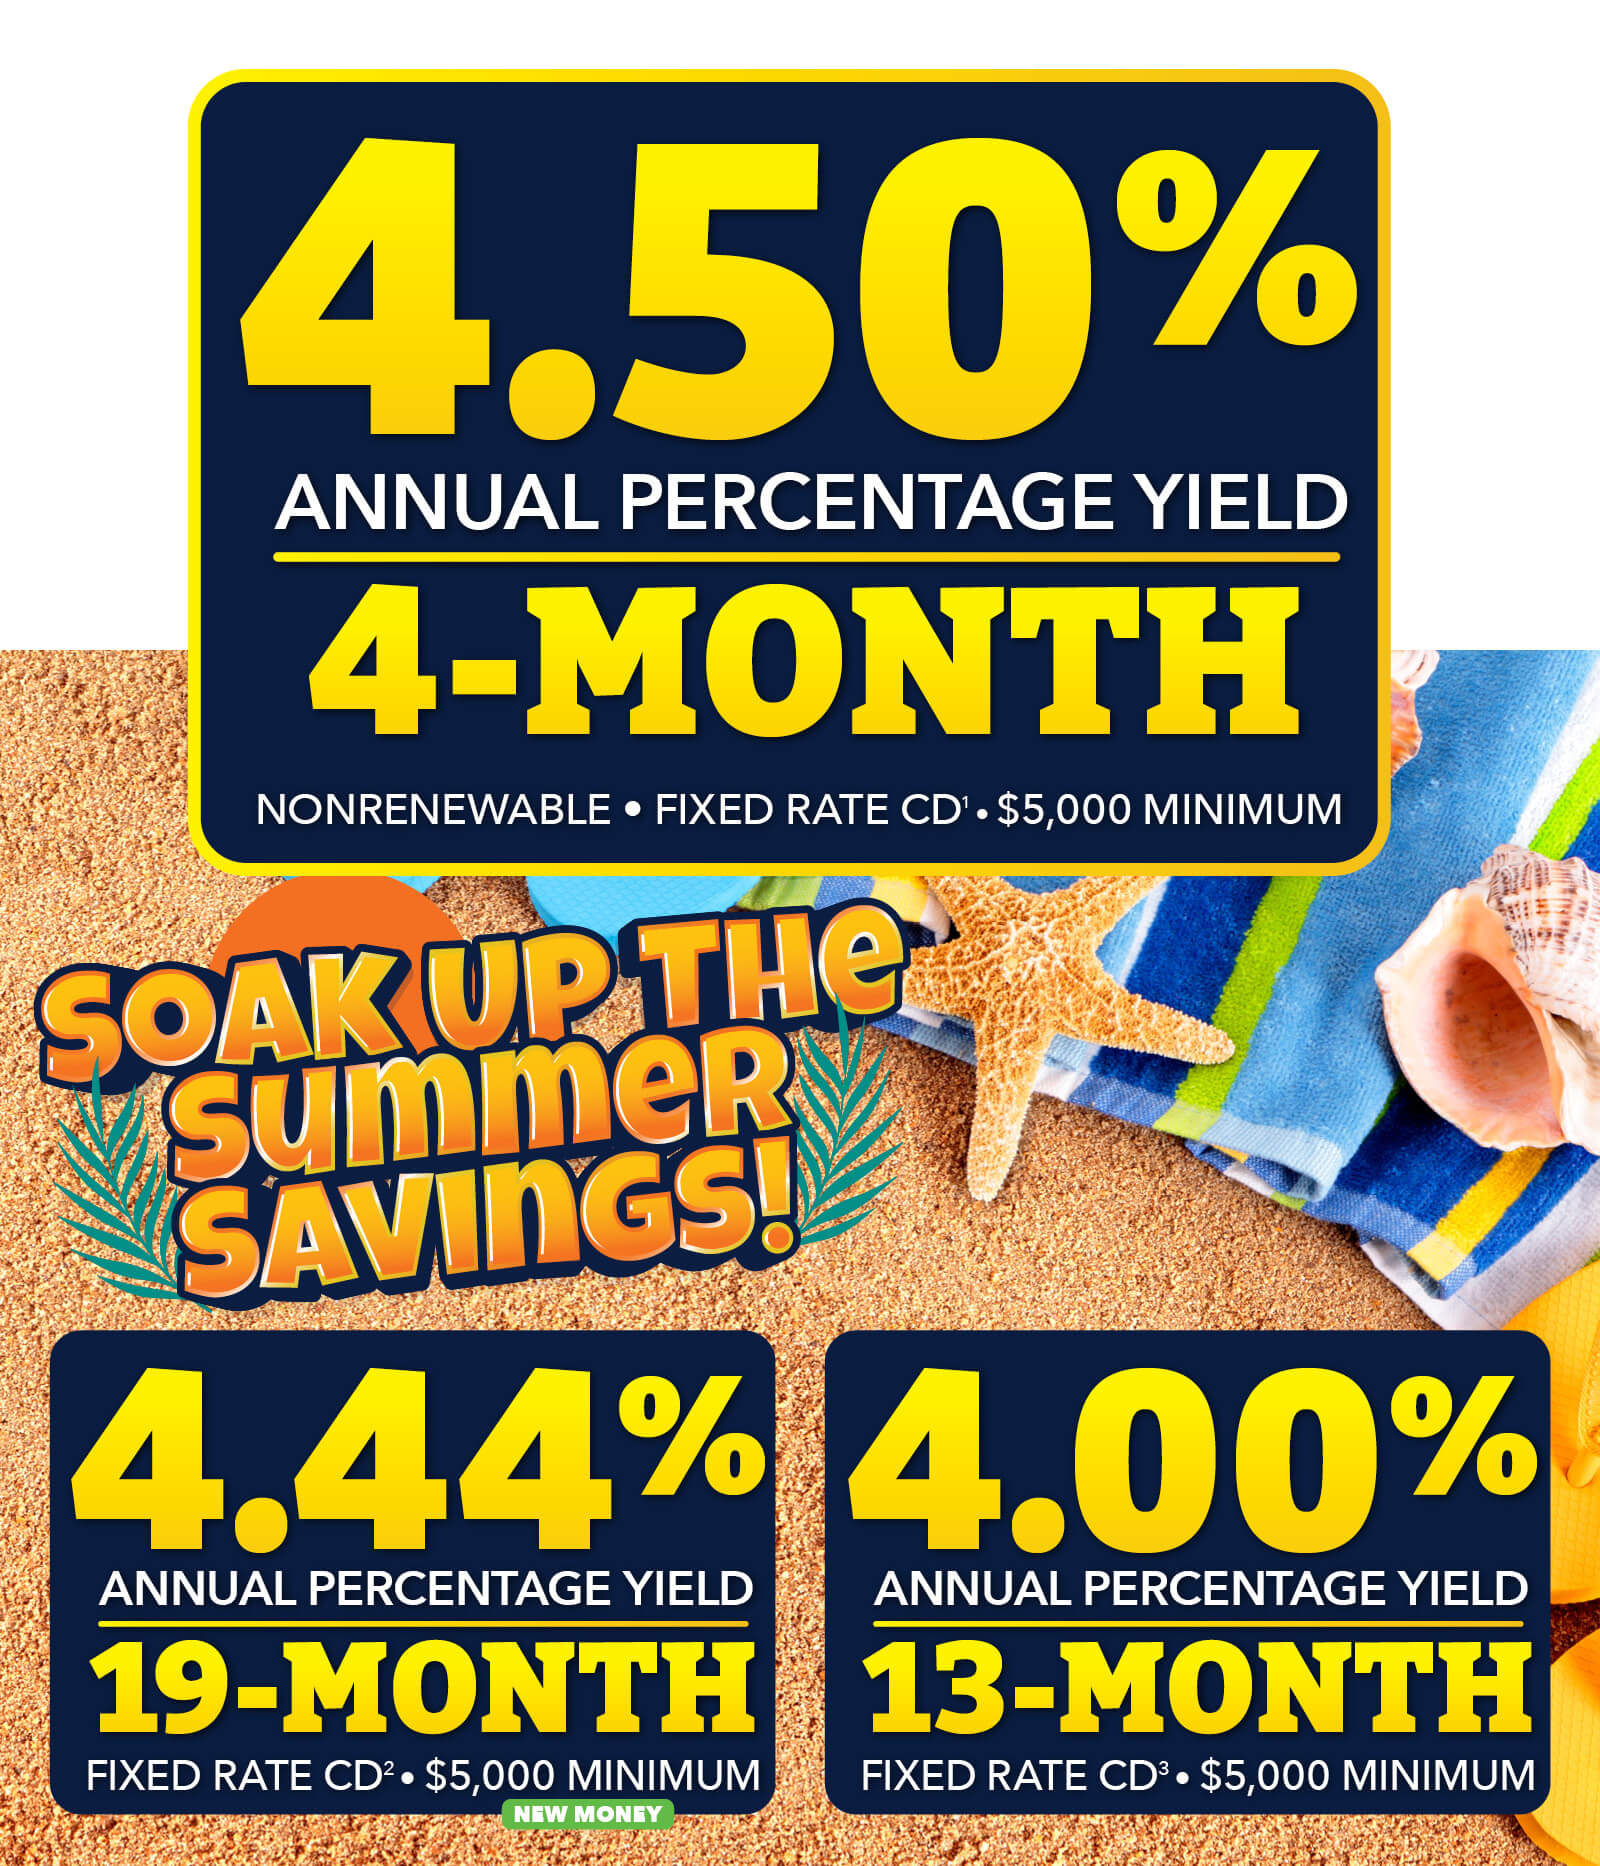 Soak Up The Summer Savings!